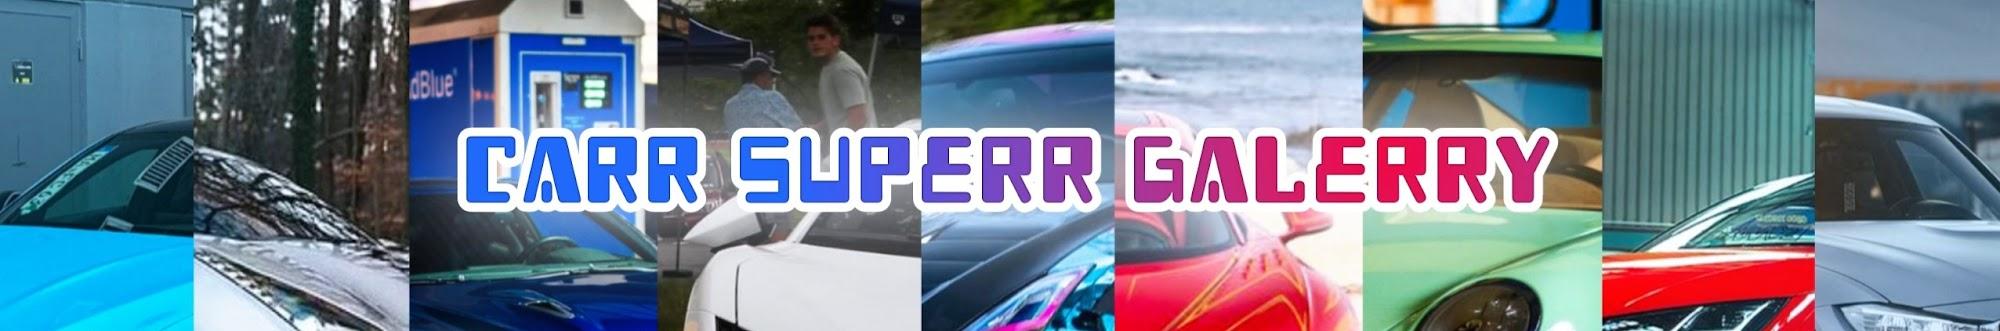 Car Super Galery